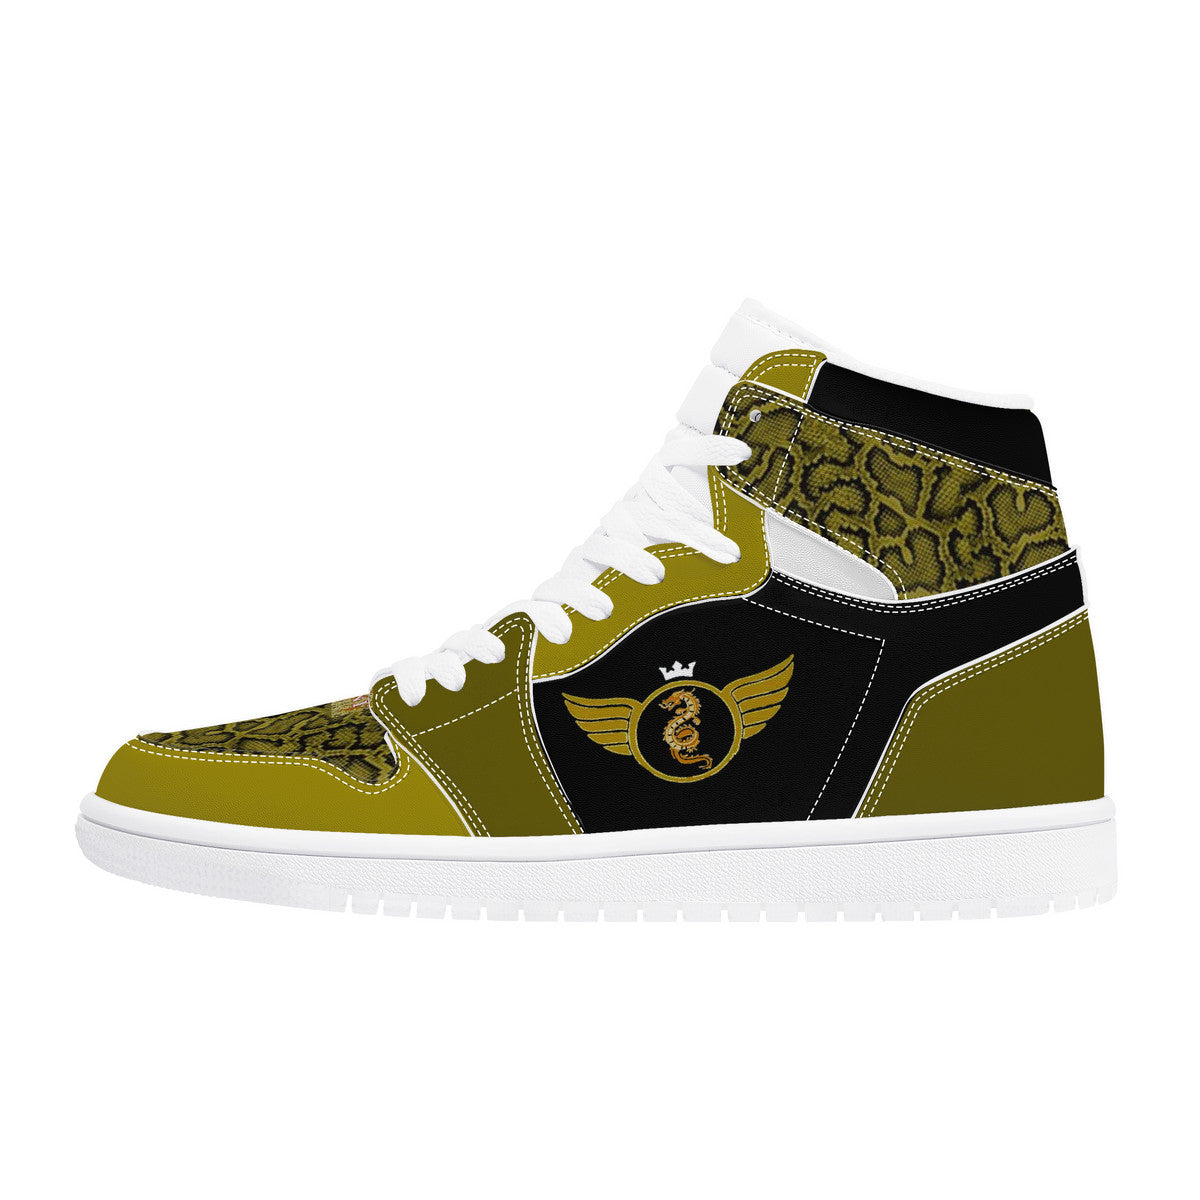 Majestics Customized High Top Yellow and Black Sneaker - Shoe Zero